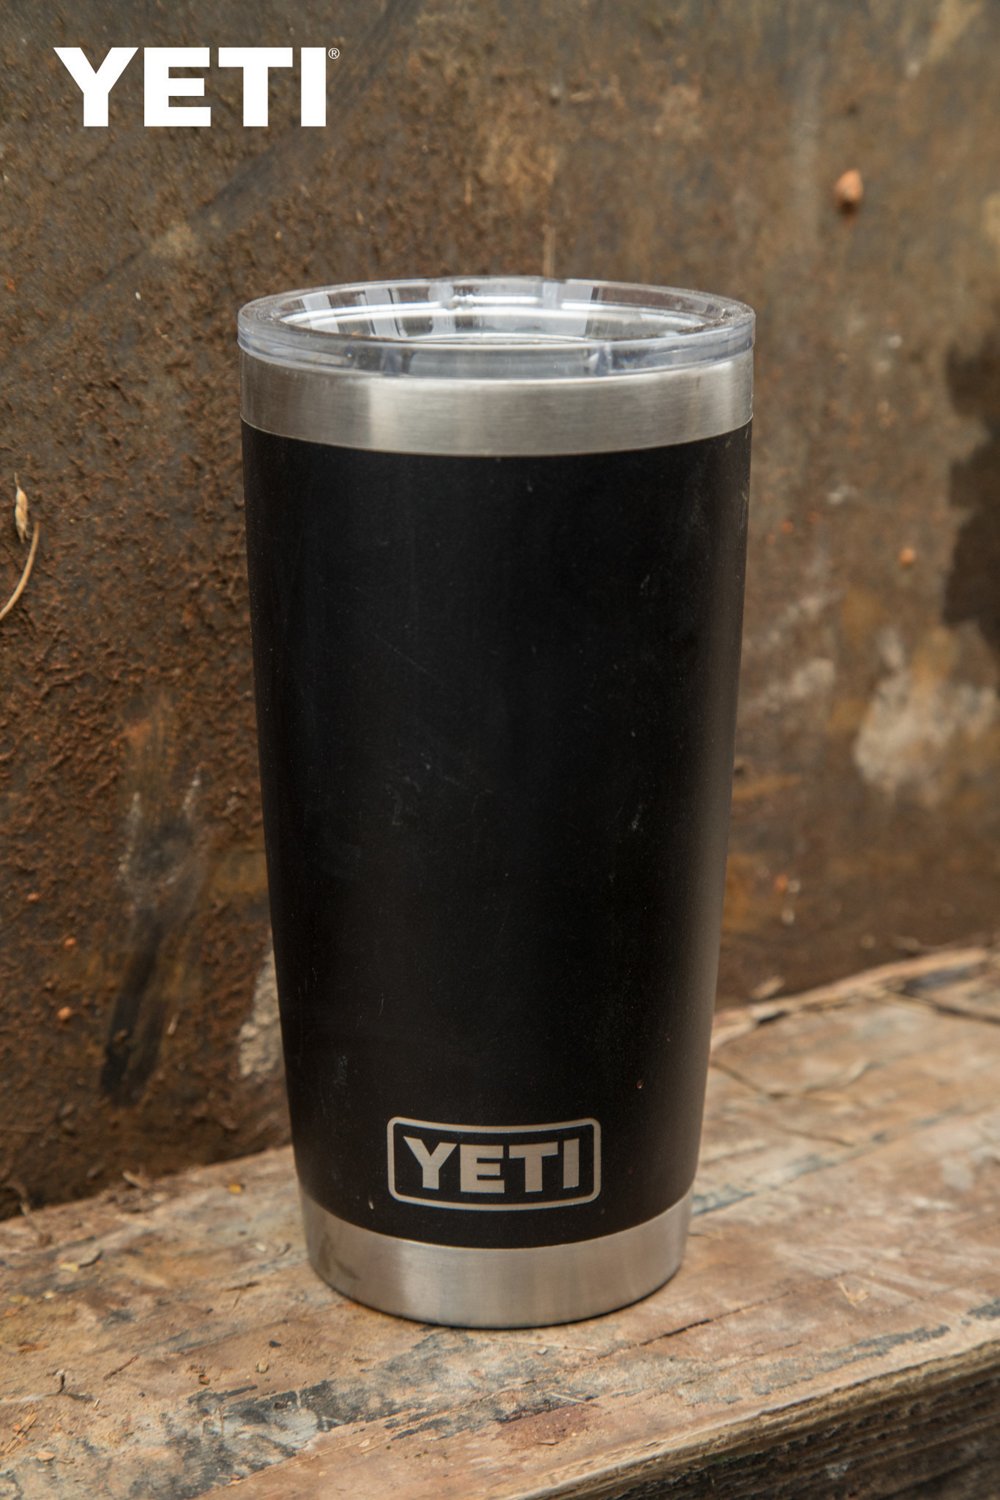 YETI® Rambler 20 Tumbler – Certified Angus Beef